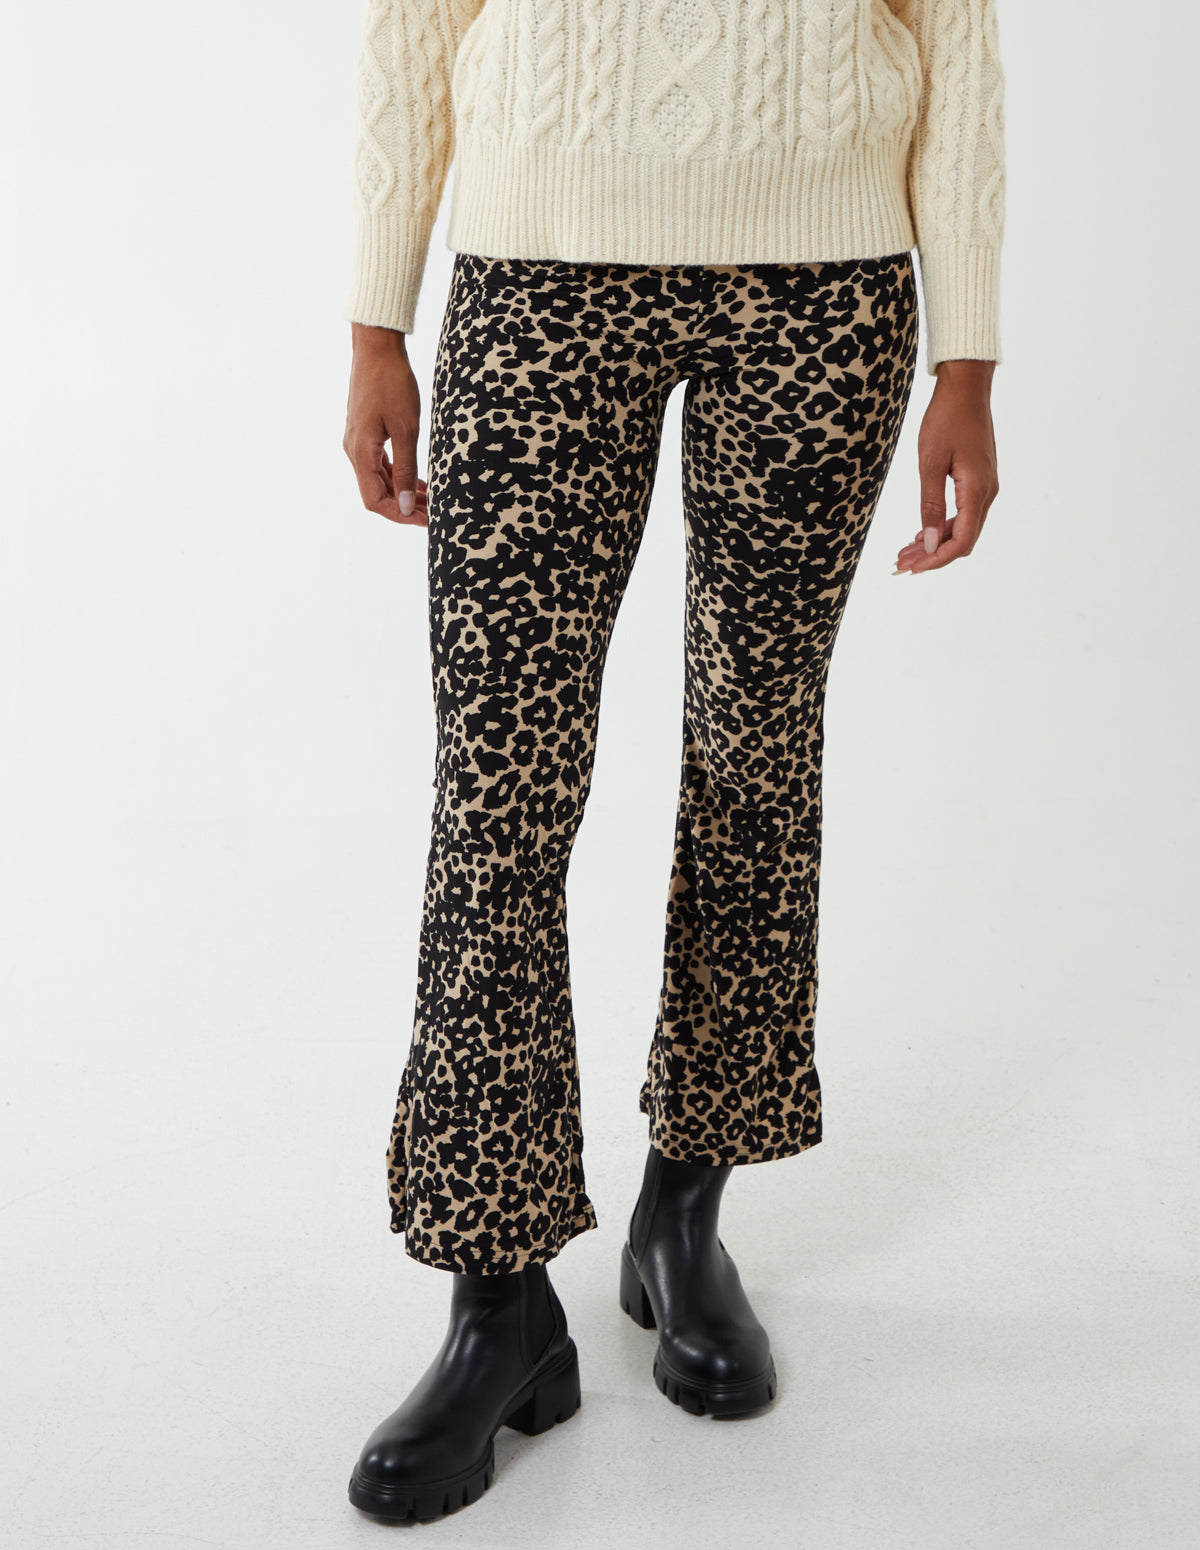 Leopard Print Flared Pants - S / STONE